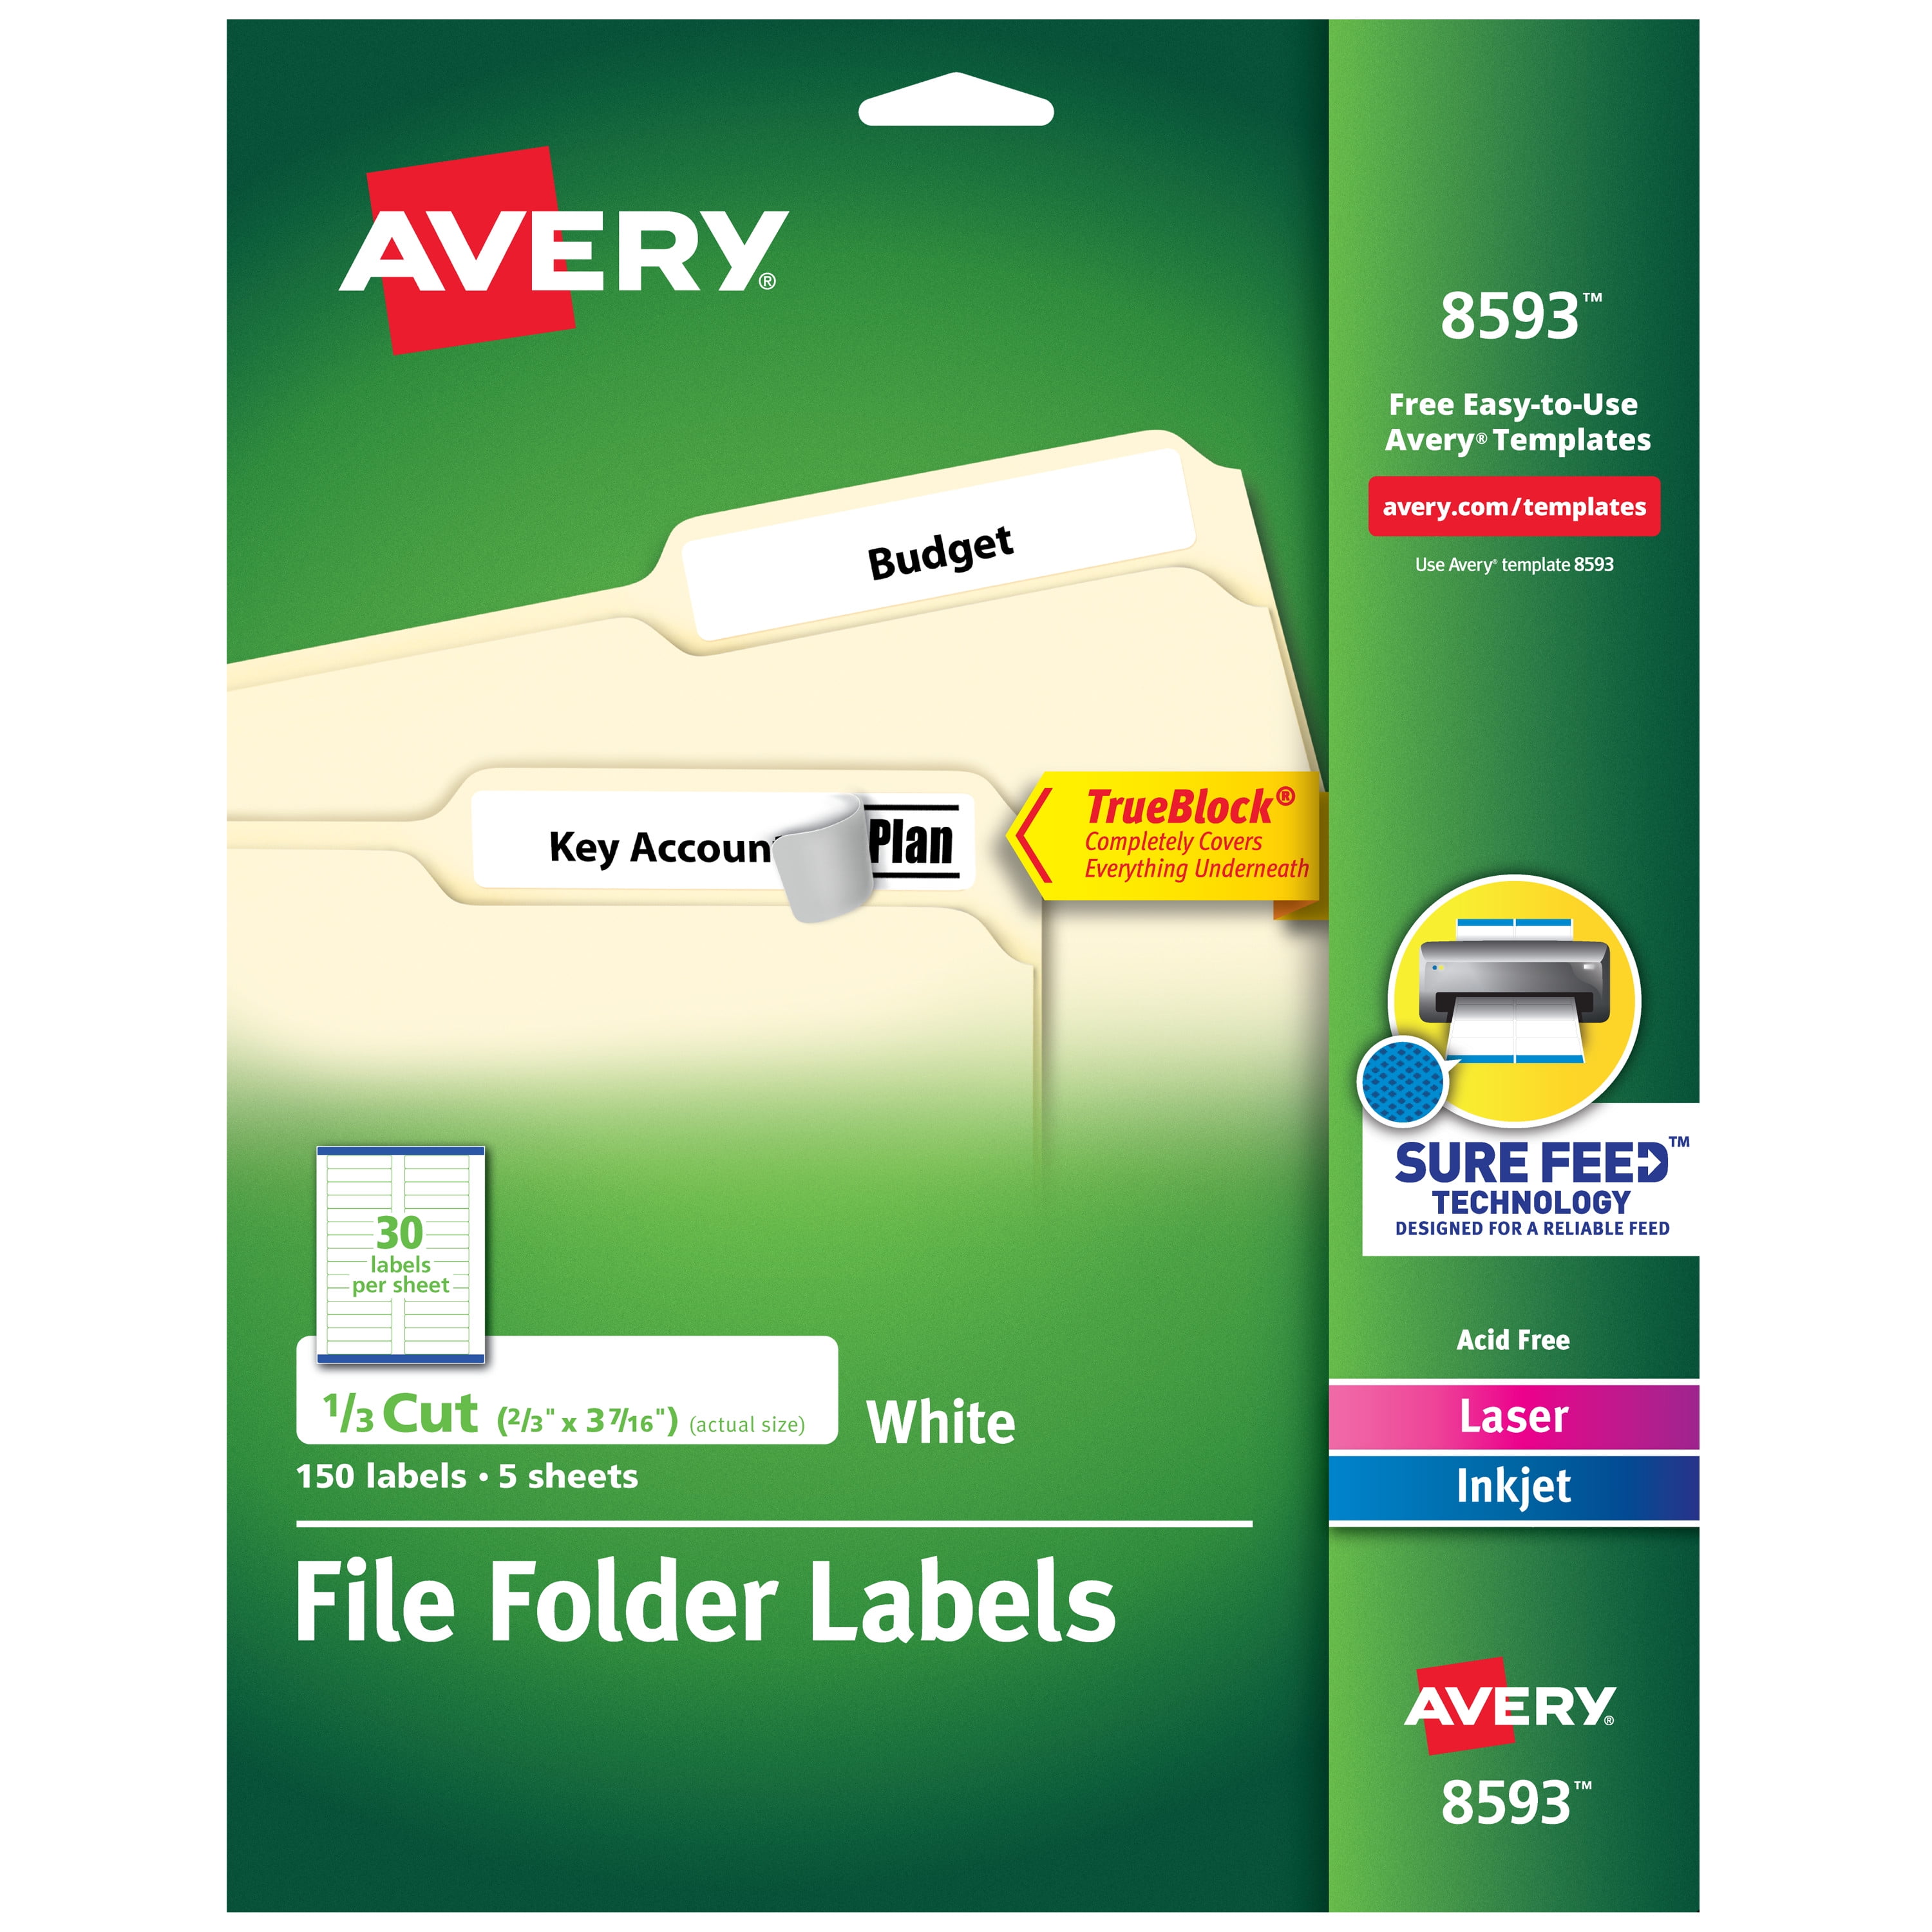 avery-5360-copy-labels-1-1-2x2-81-21c-pk100-72782053604-ebay